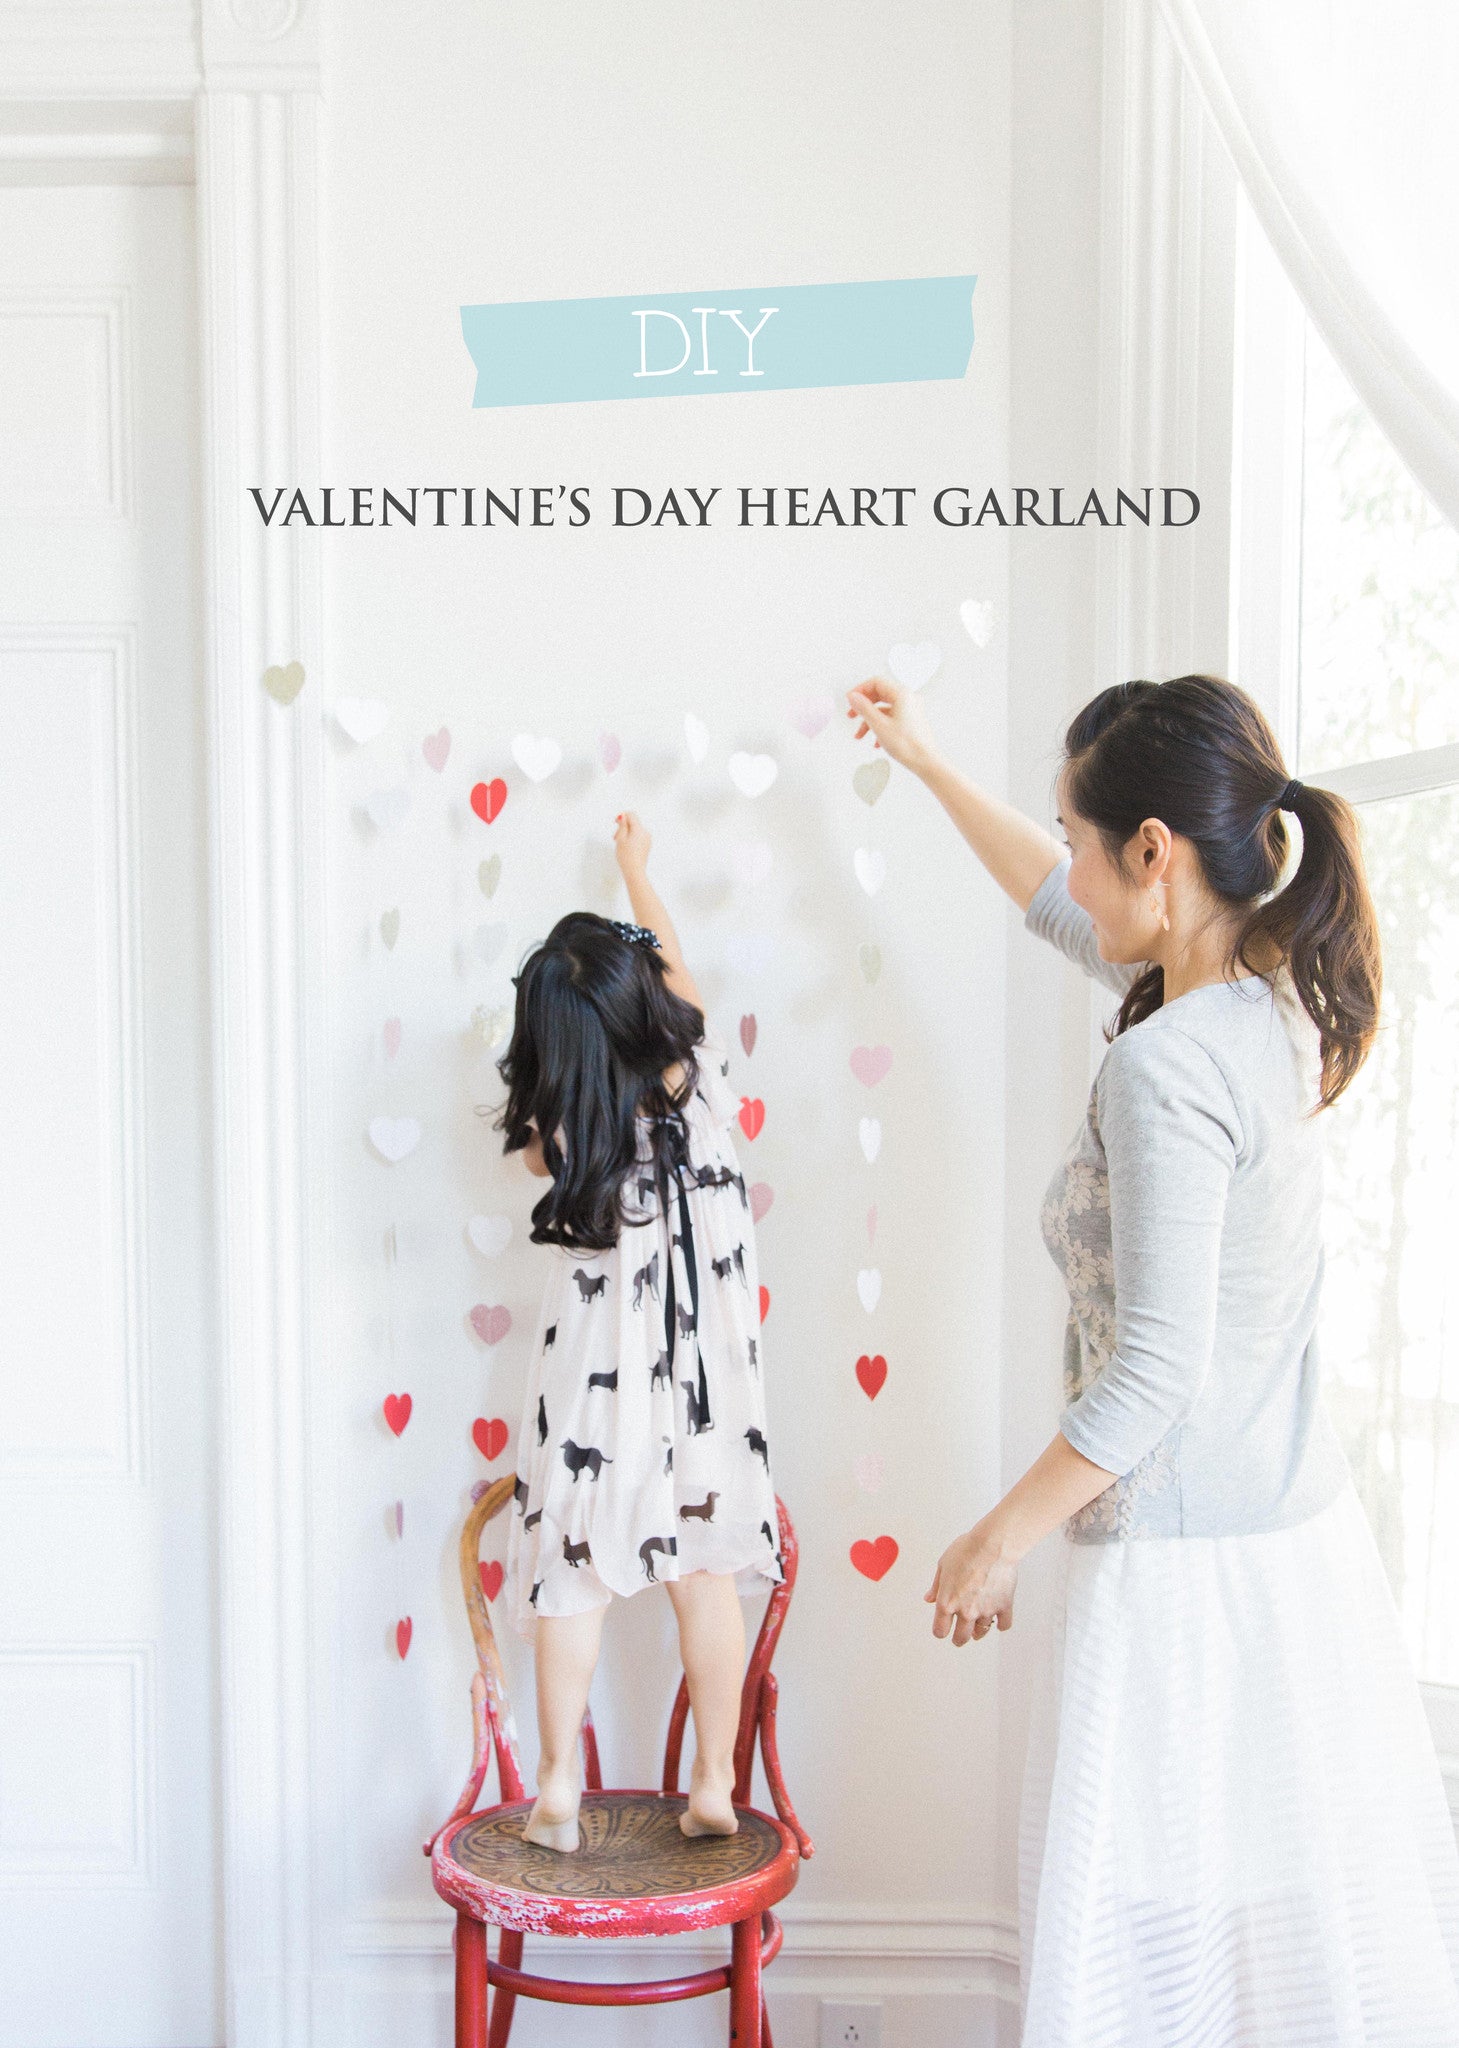 Valentine's Day Heart Garland DIY Project